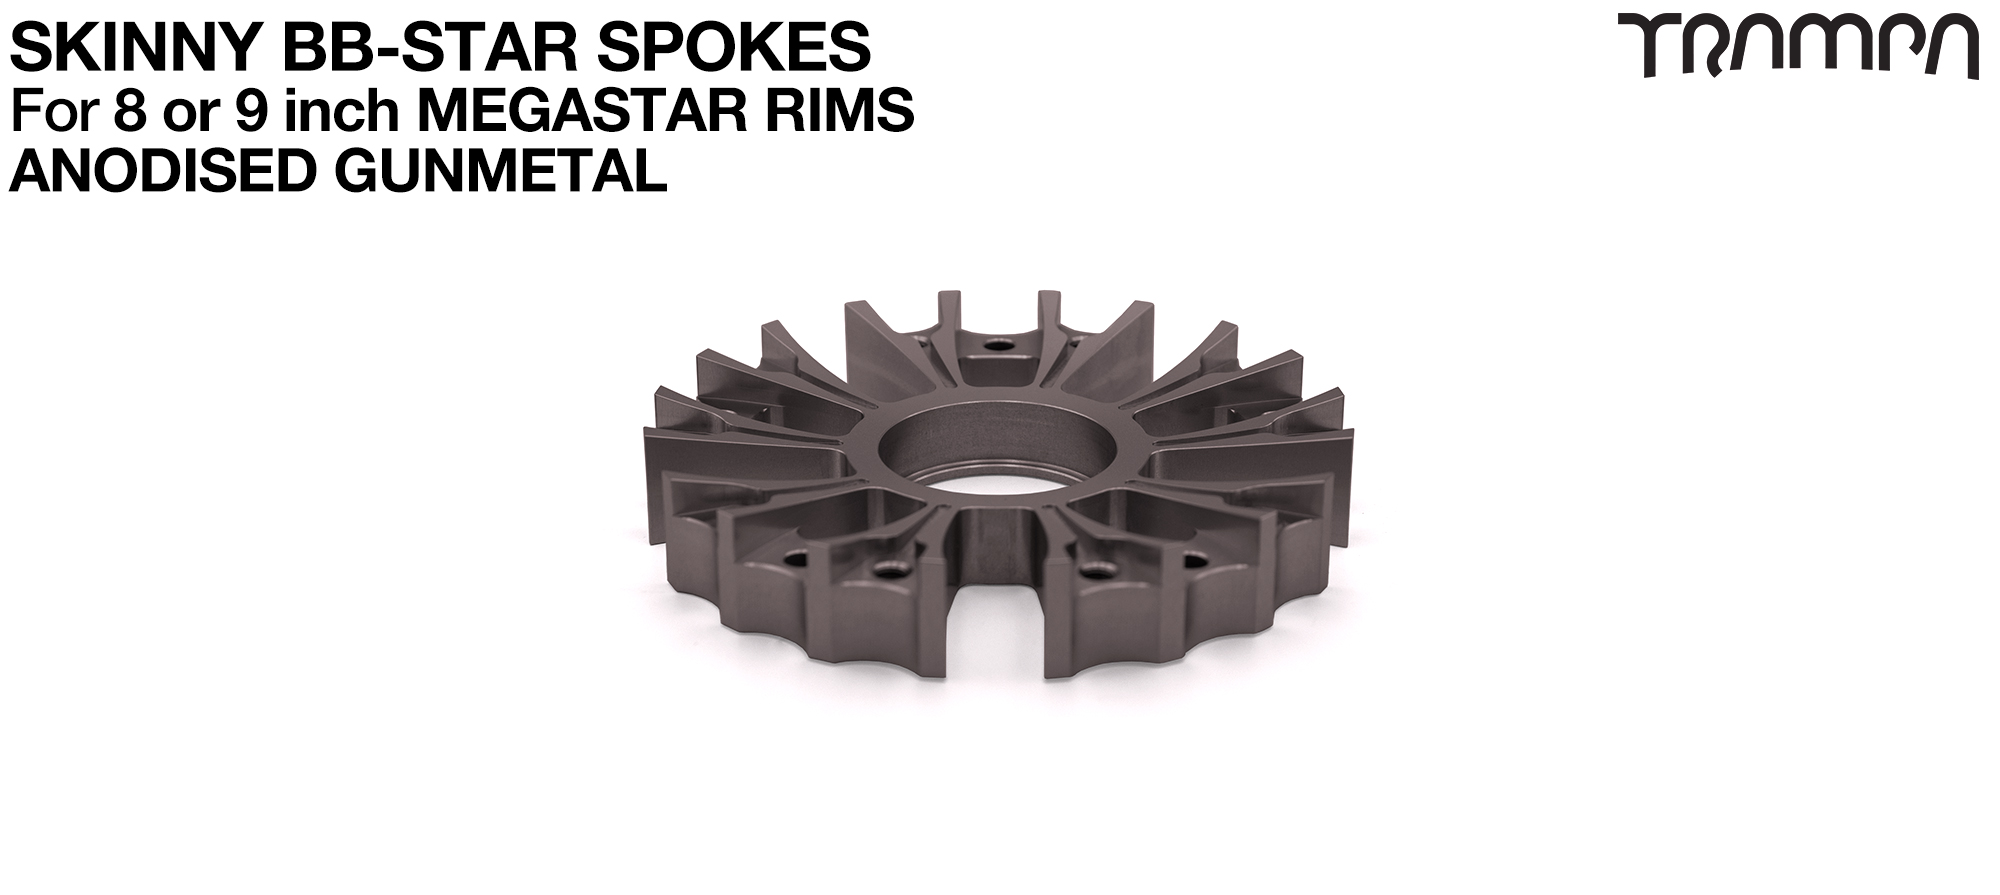 BBStar SKINNY Spoke for MEGASTAR 8 & 9 Rims - Extruded T6 Heat Treated & CNC Precision milled - GUNMETAL